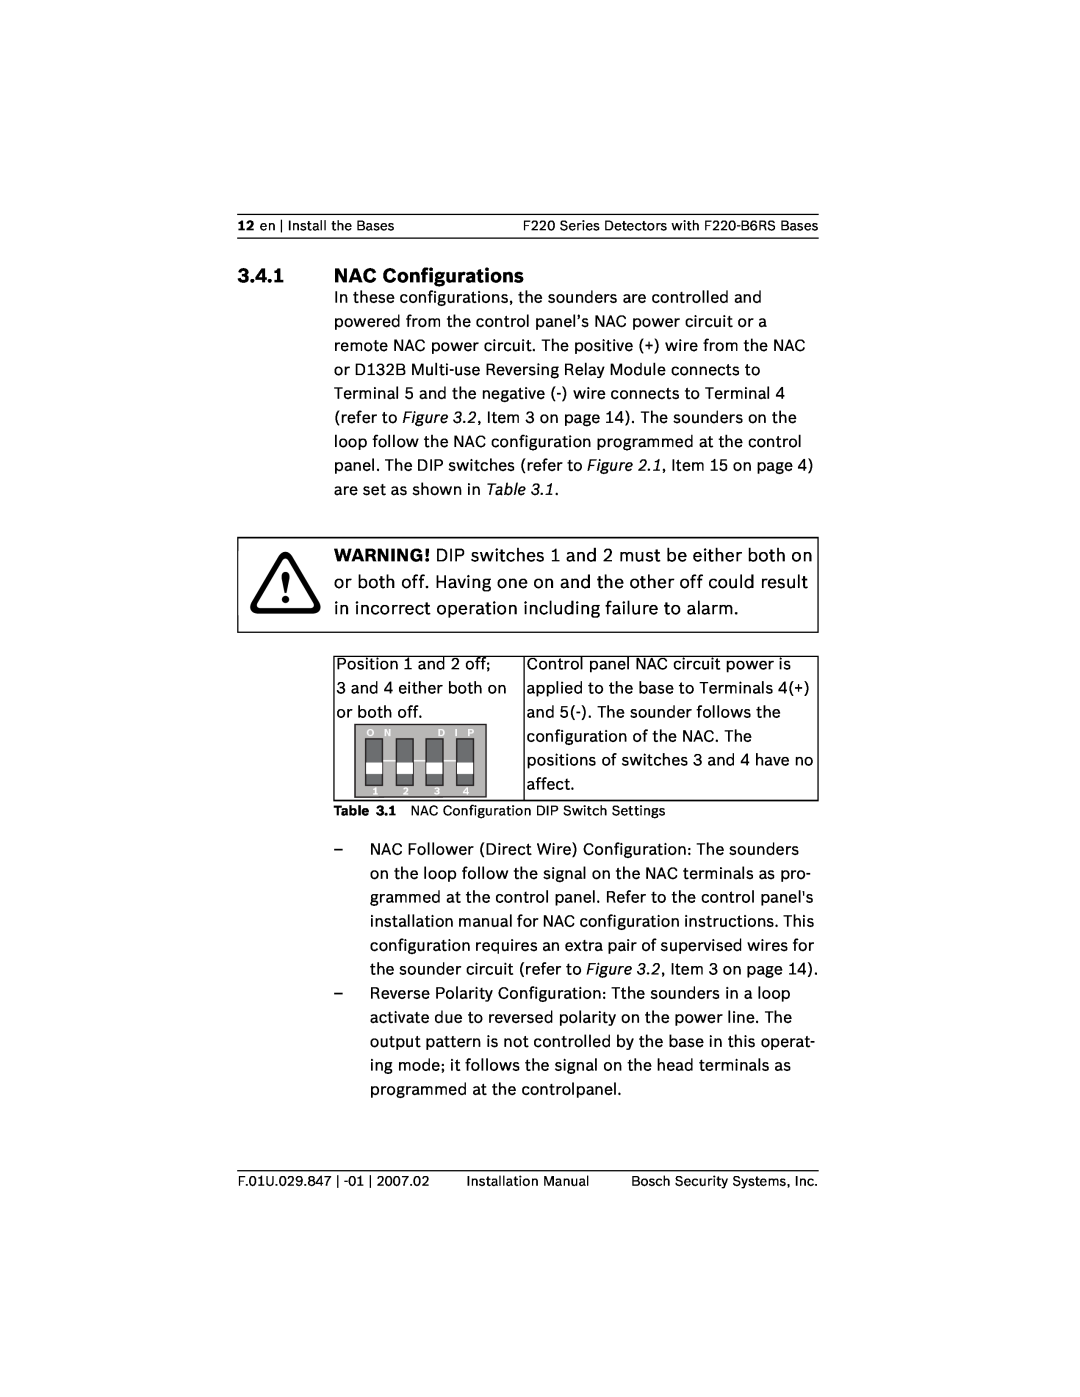 Bosch Appliances F220-B6RS installation manual 3.4.1NAC Configurations 